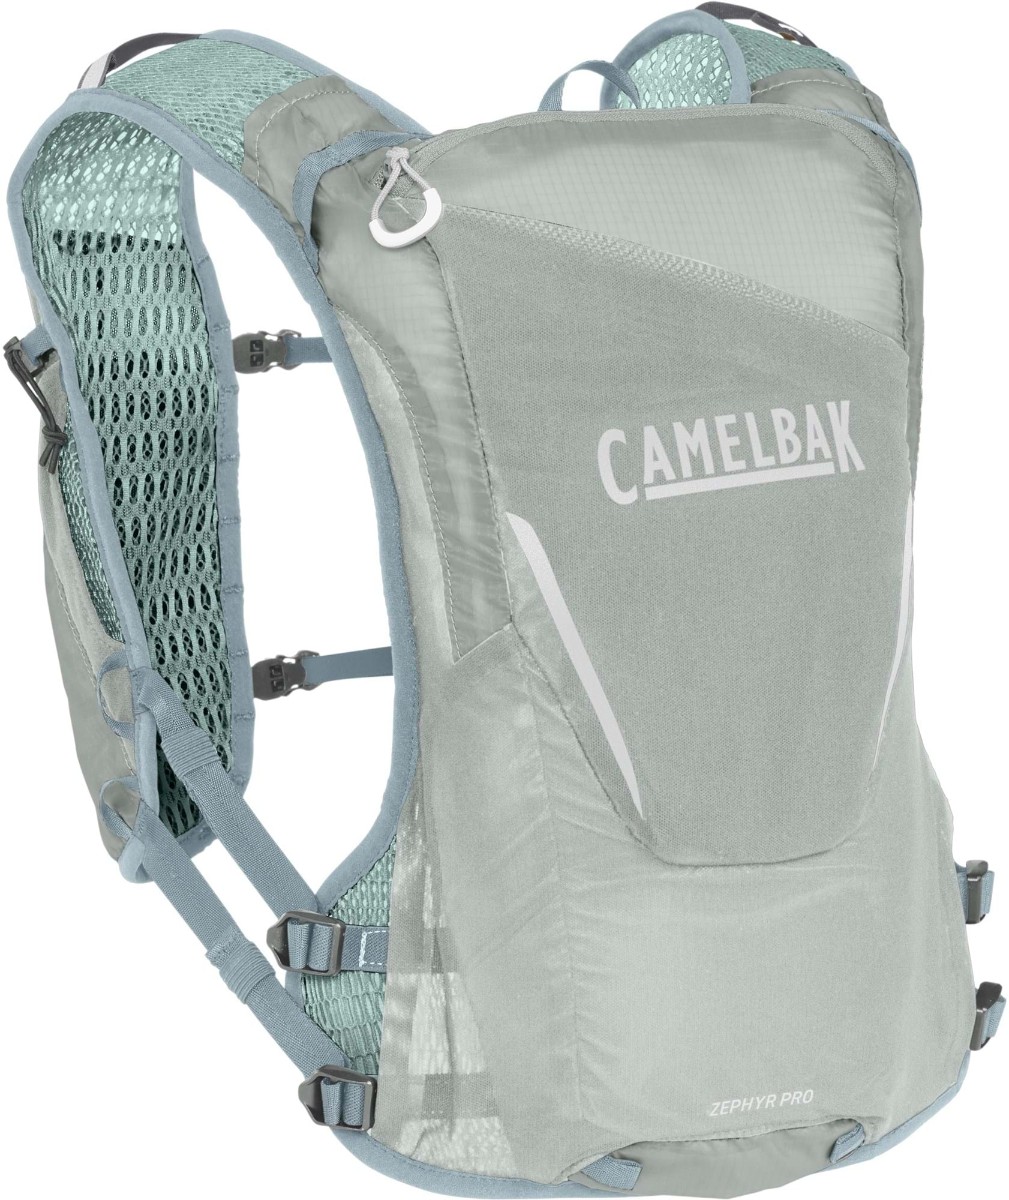 CamelBak Zephyr Pro 11L Hydration Vest with 1L Hydration product image